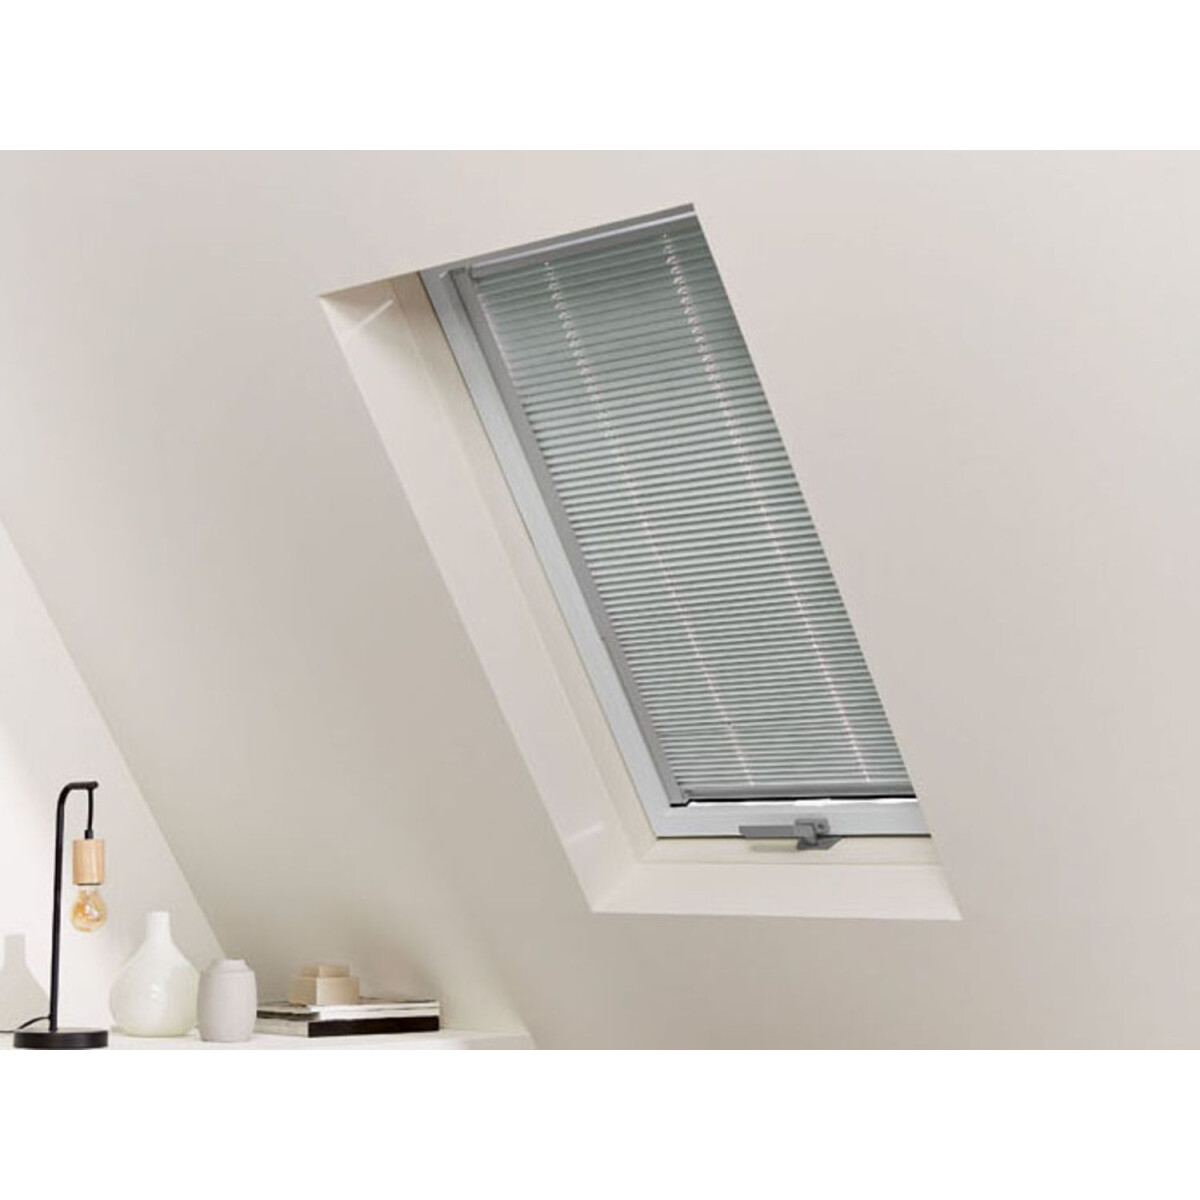 Livarno Home Thermo Plissee, für Dachfenster - B-Ware, 17,99 €